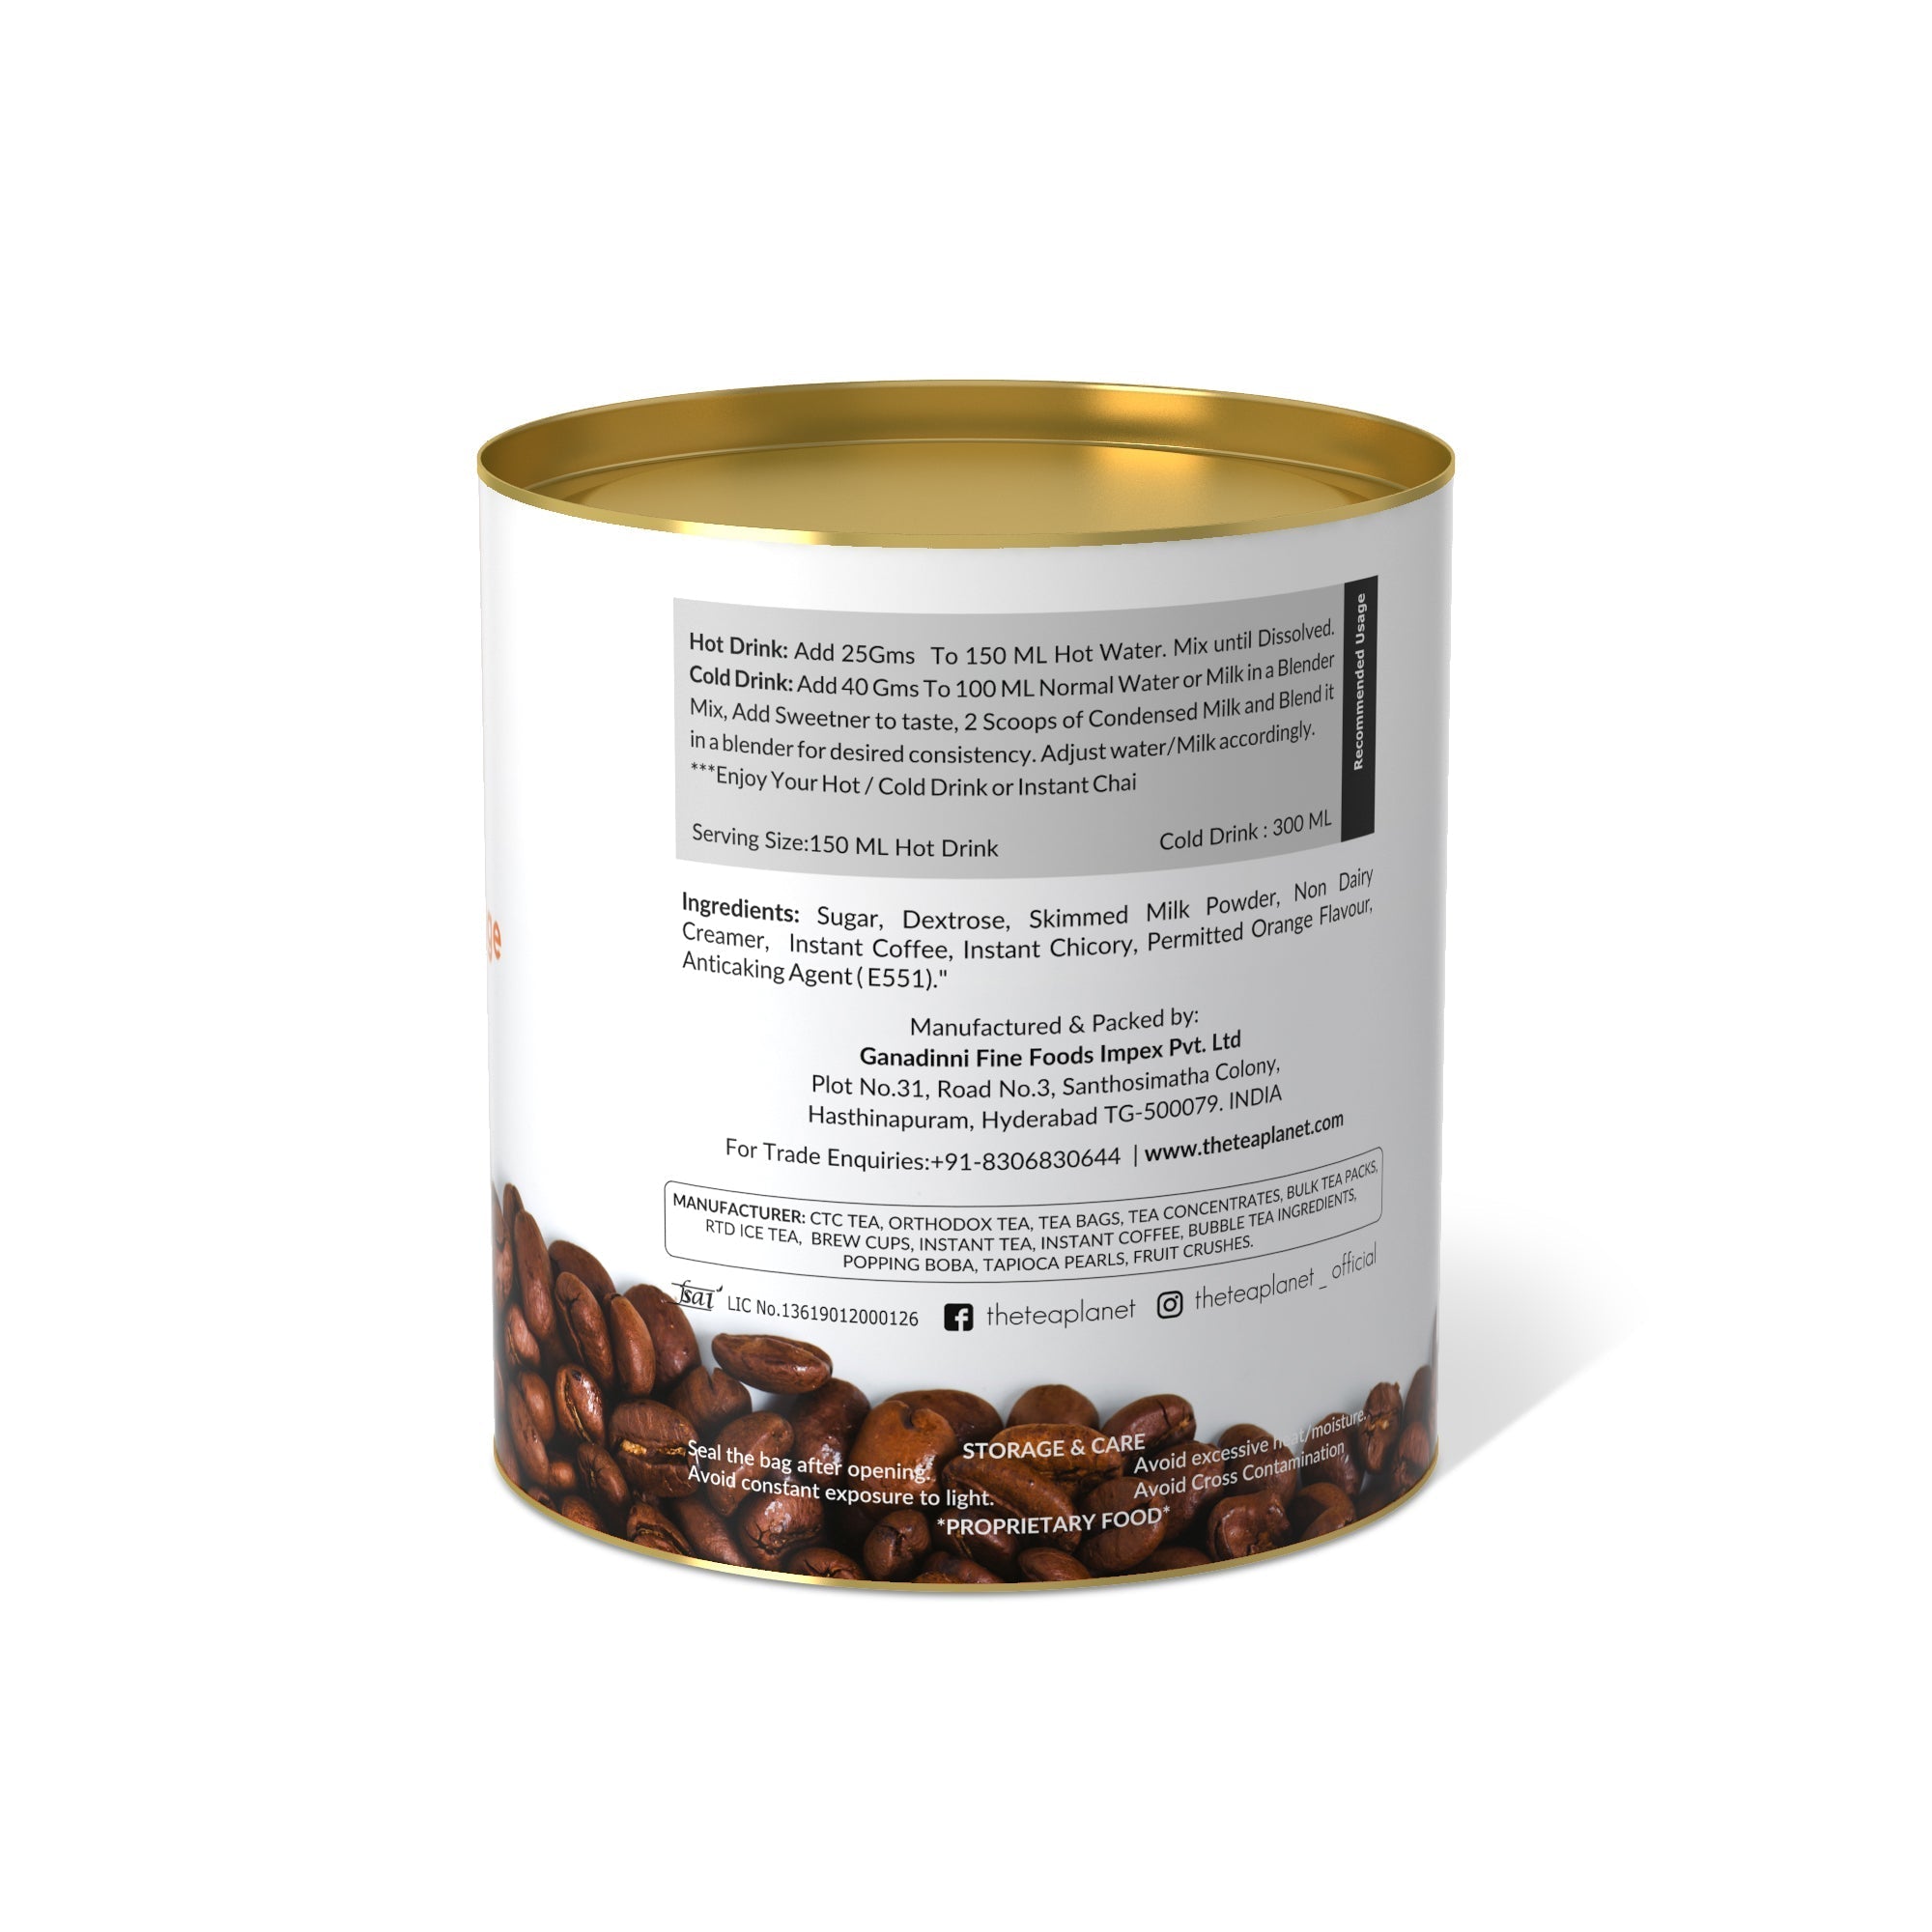 Mandarin Orange Instant Coffee Premix (3 in 1) - 800 gms